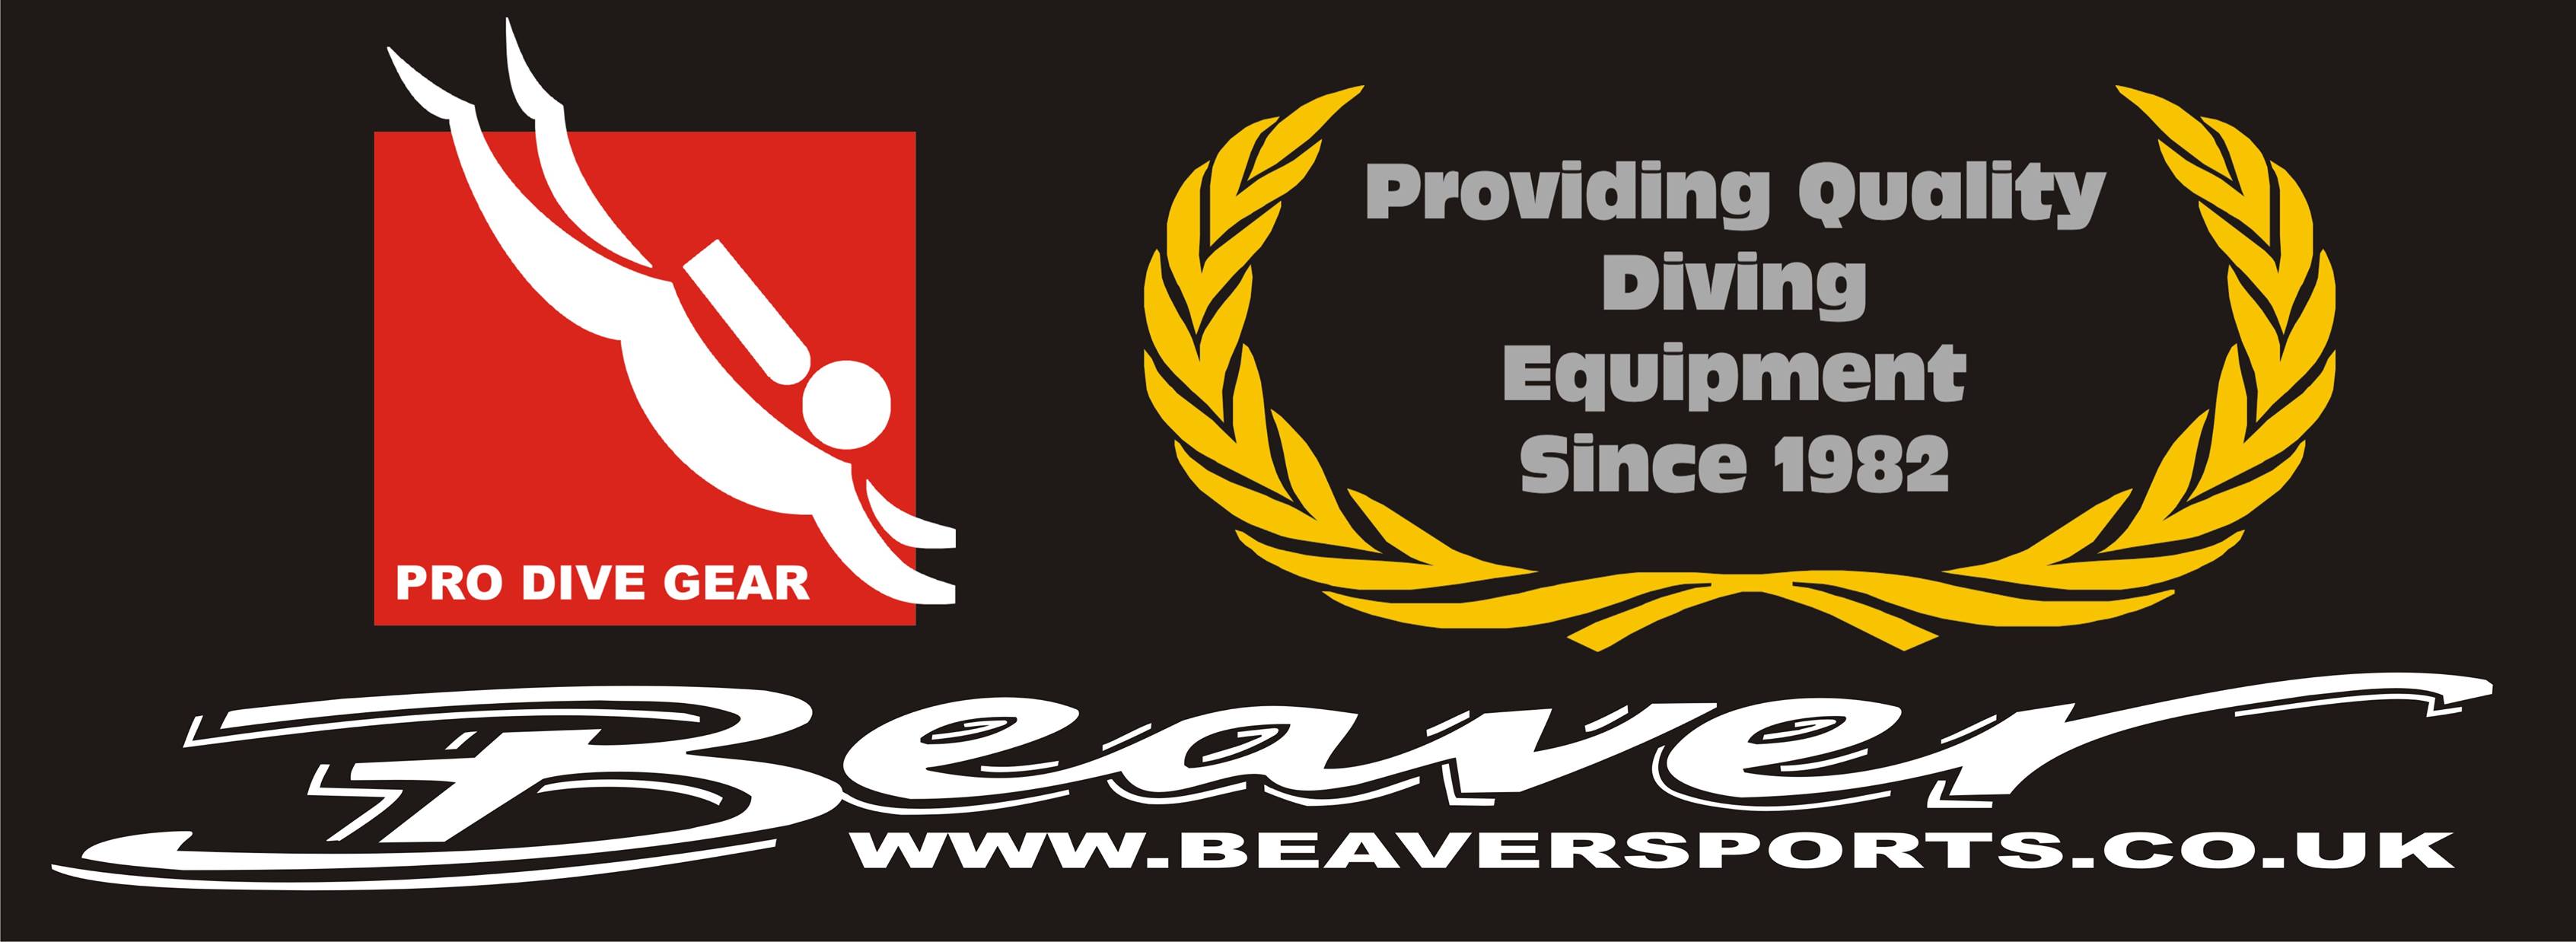 Beaver Sports Ltd